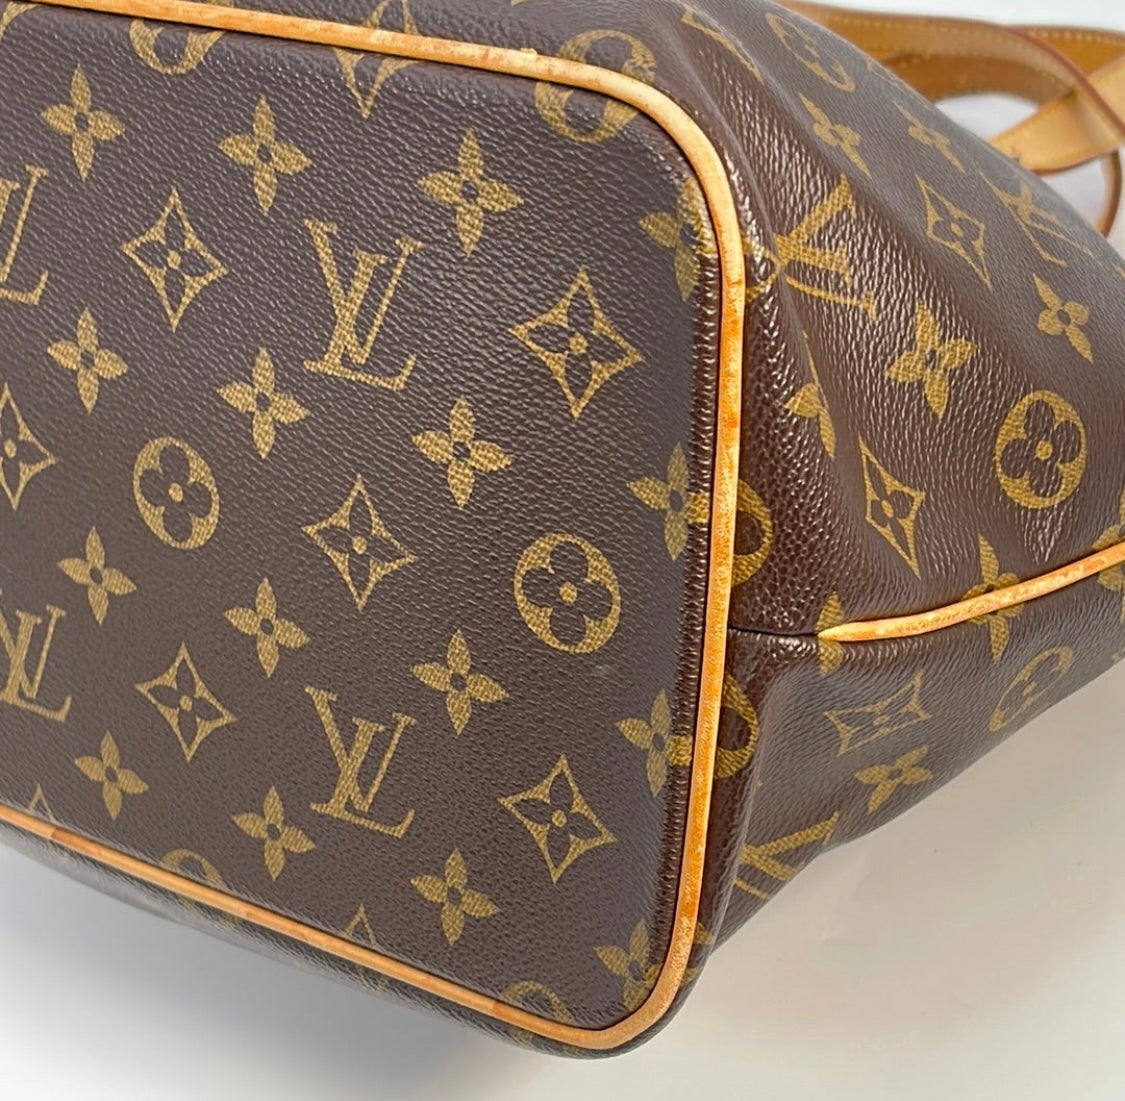 Preloved Louis Vuitton Palermo PM Bag SR0039 031323 ** DEAL